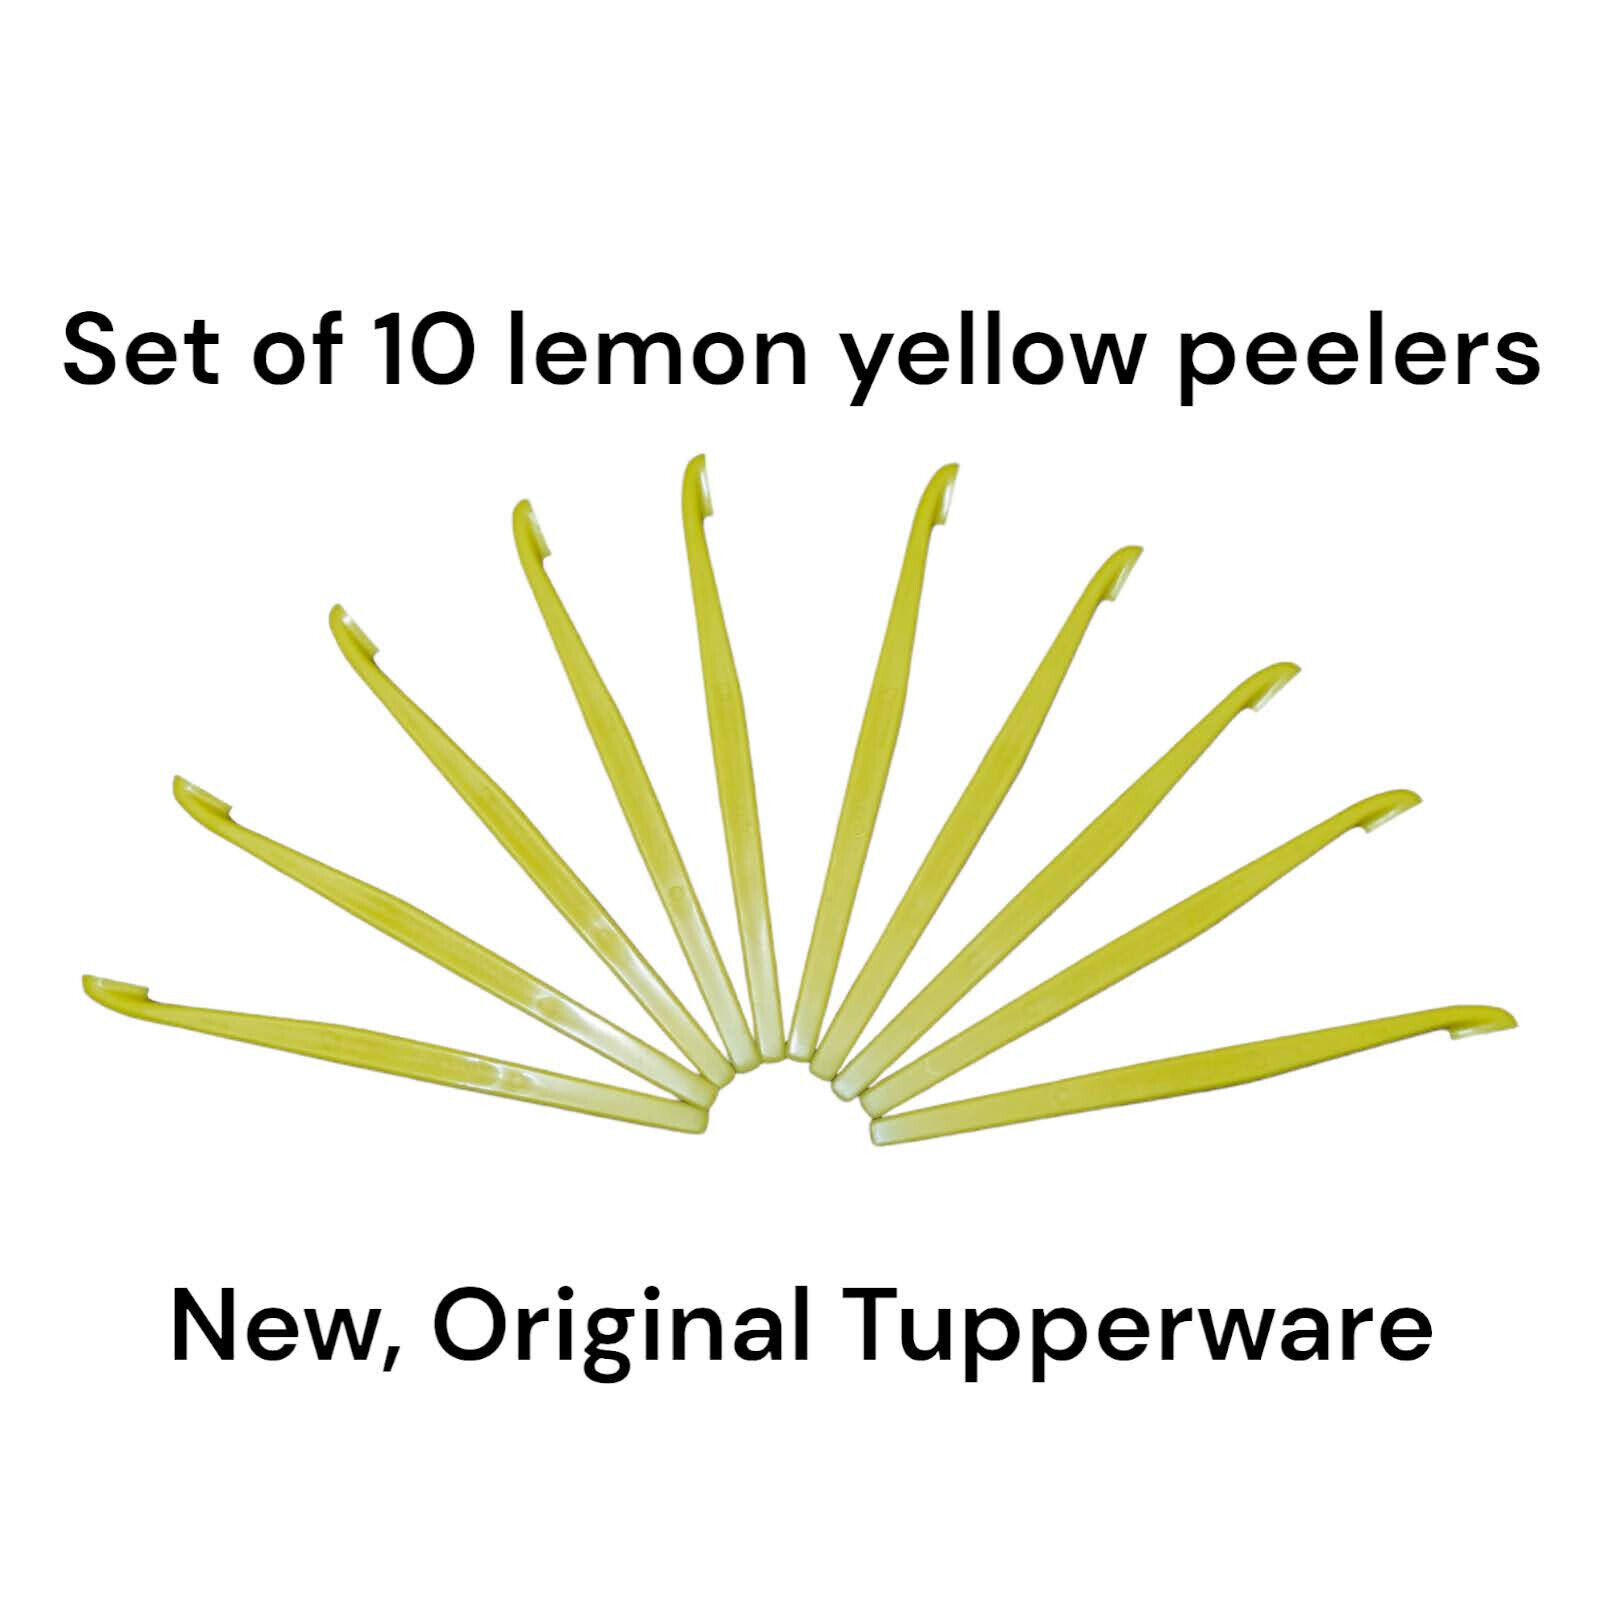 Original New Tupperware Citrus Peelers Lemon Yellow Set of 10 Pcs